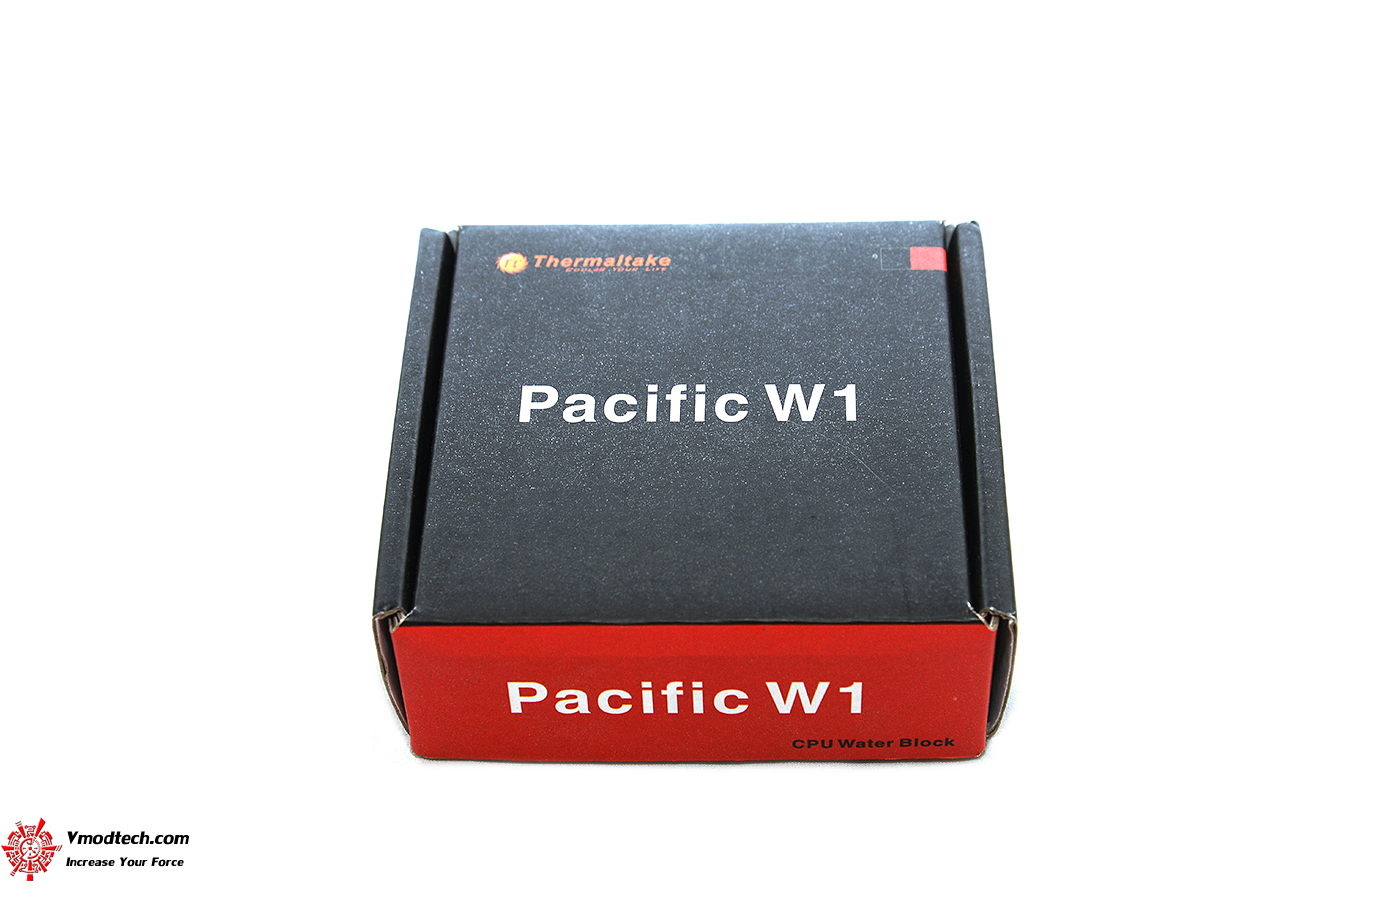 dsc 8290 Thermaltake Pacific W1 CPU Water Block Review